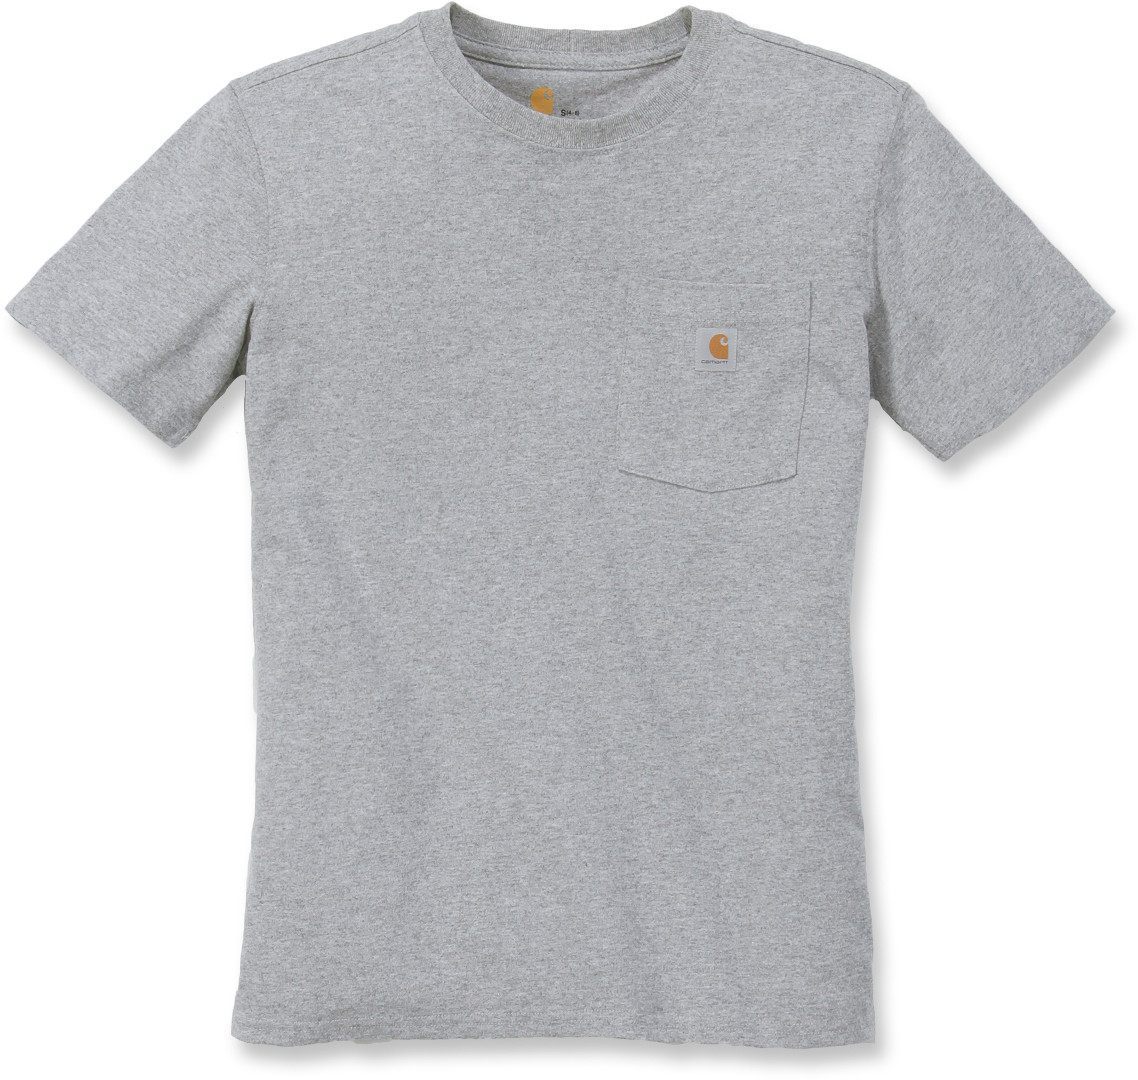 Carhartt Workwear Pocket Camiseta para mujeres - Gris (S)